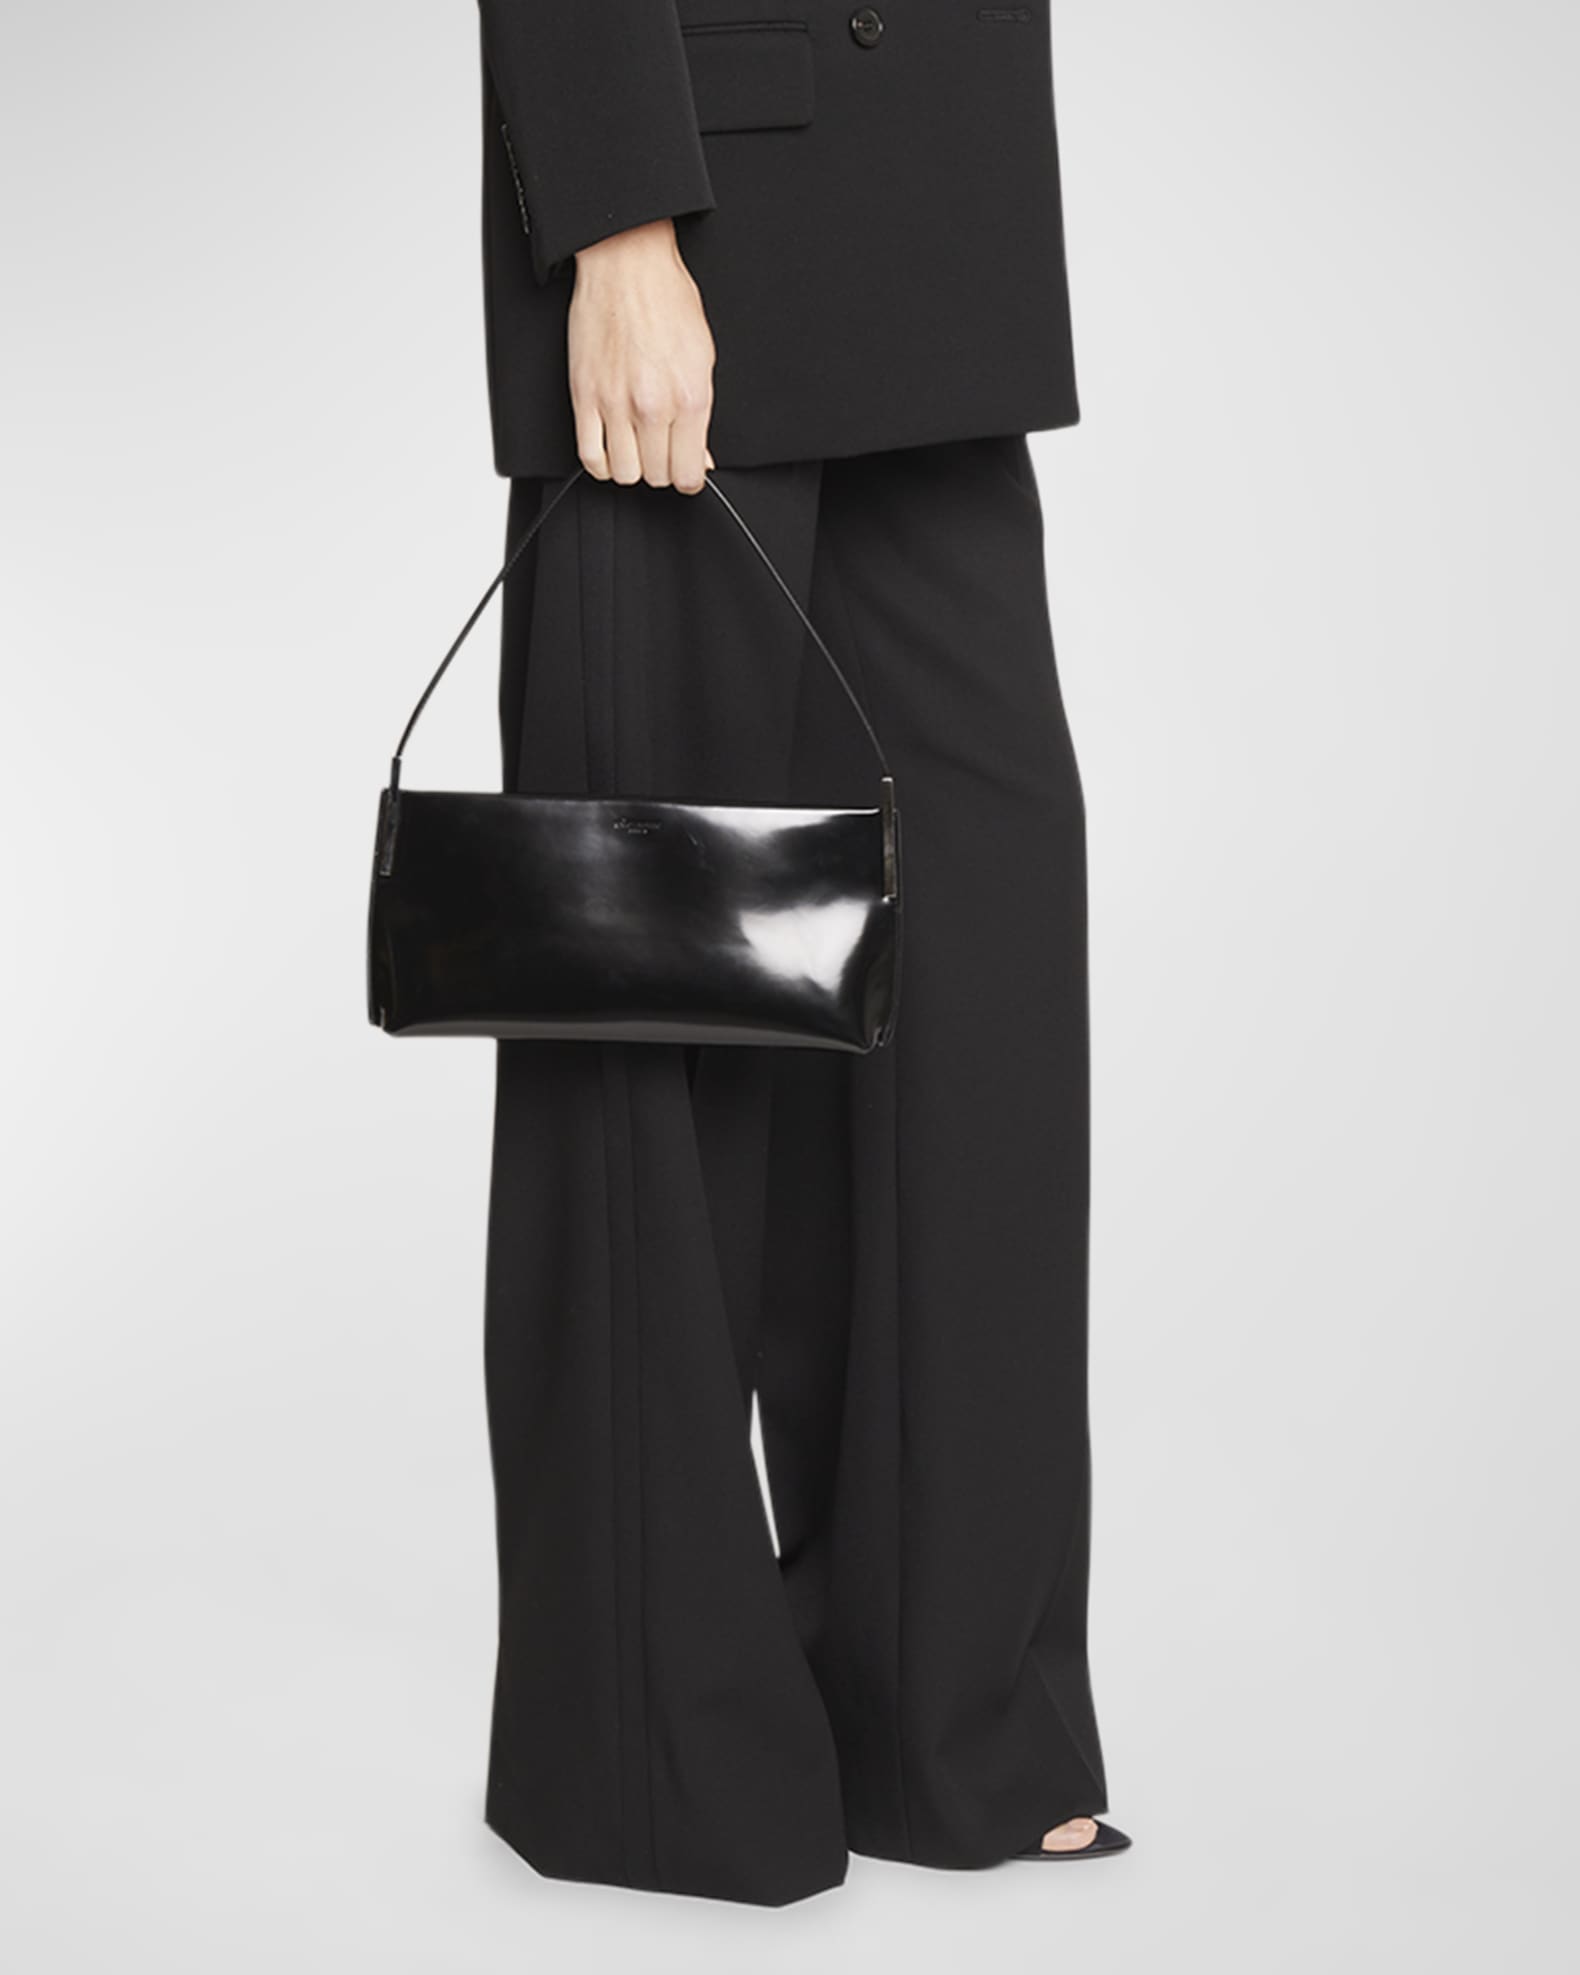 Saint Laurent - Suzanne Black Leather Small Hobo Bag